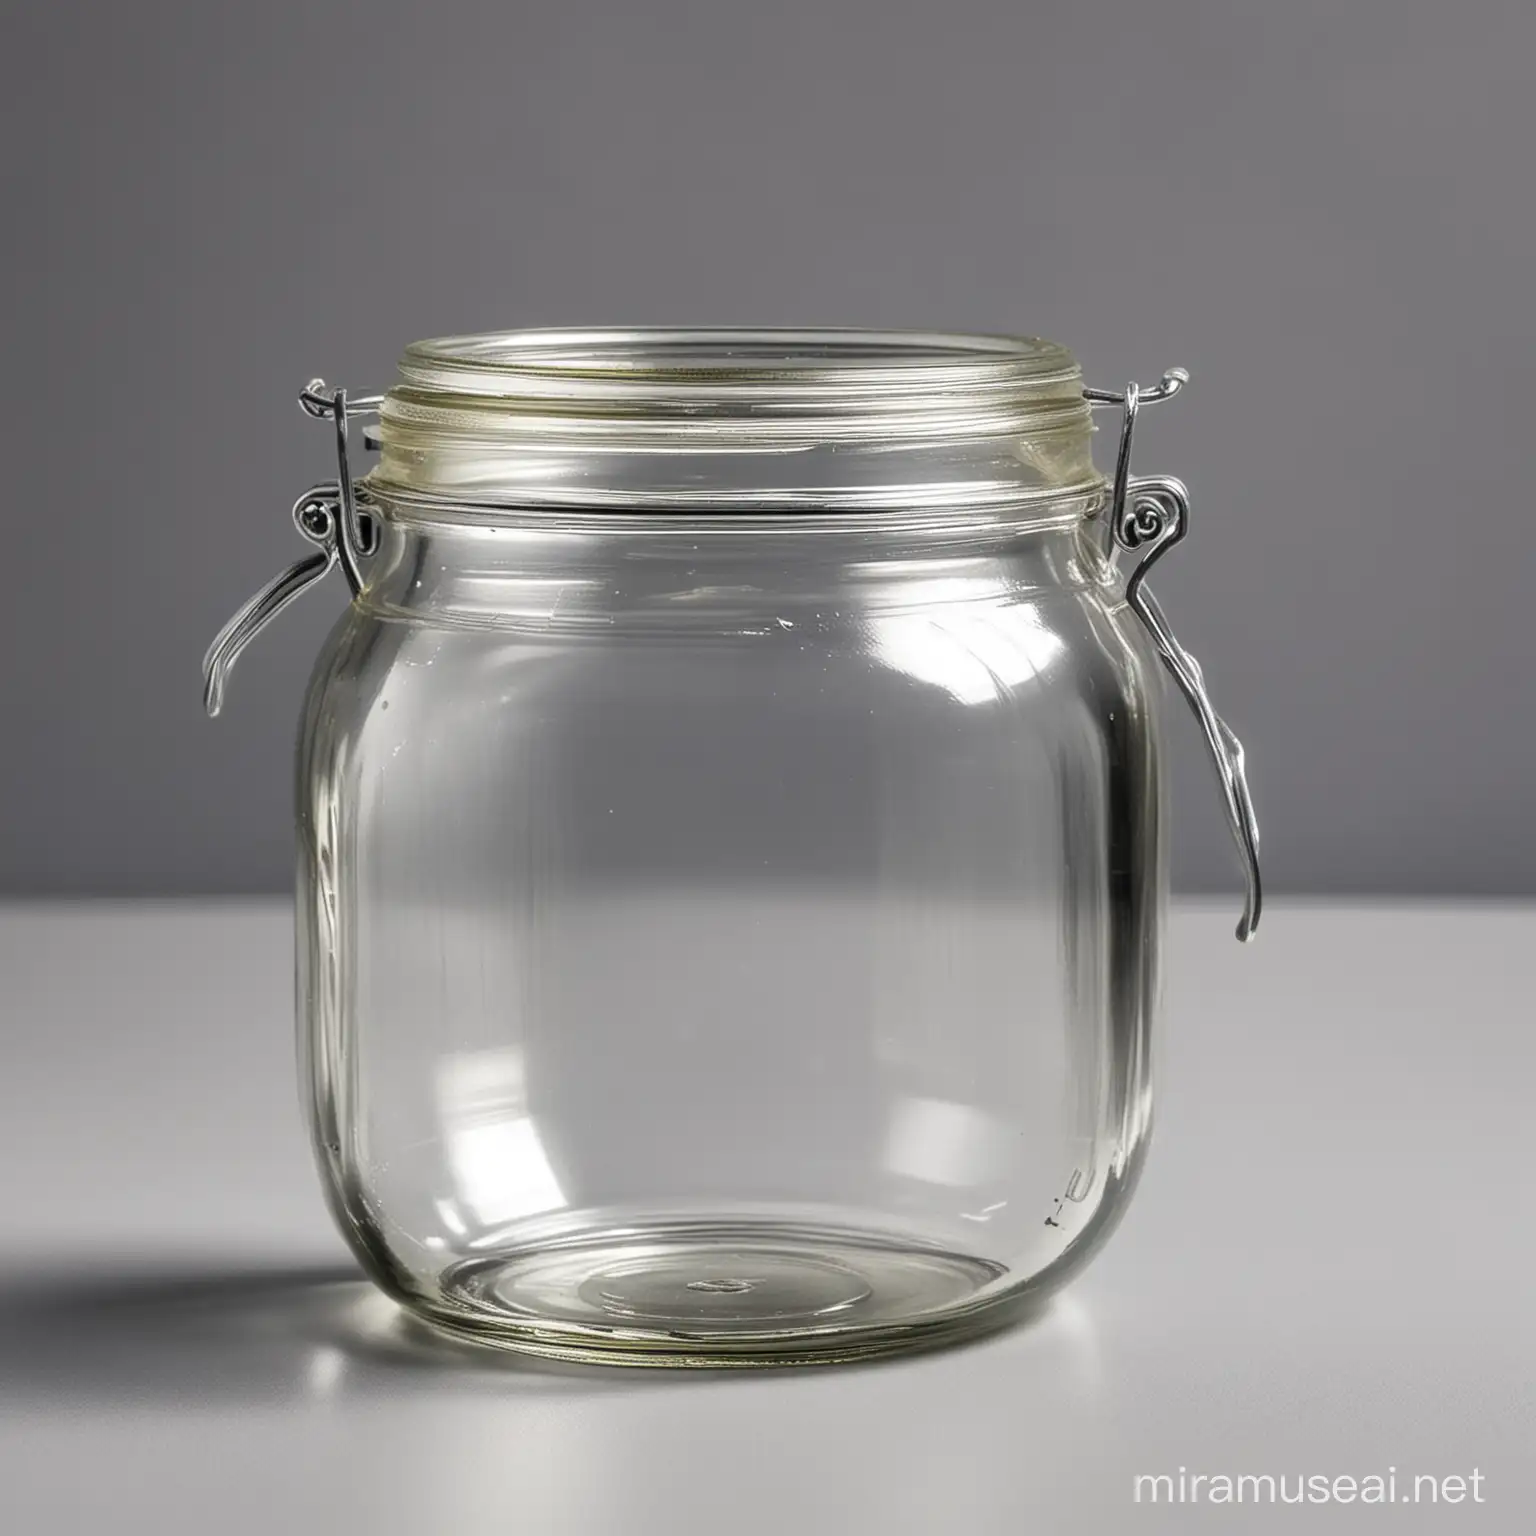 ApeCar Enclosed in Transparent Jar on Silver Background